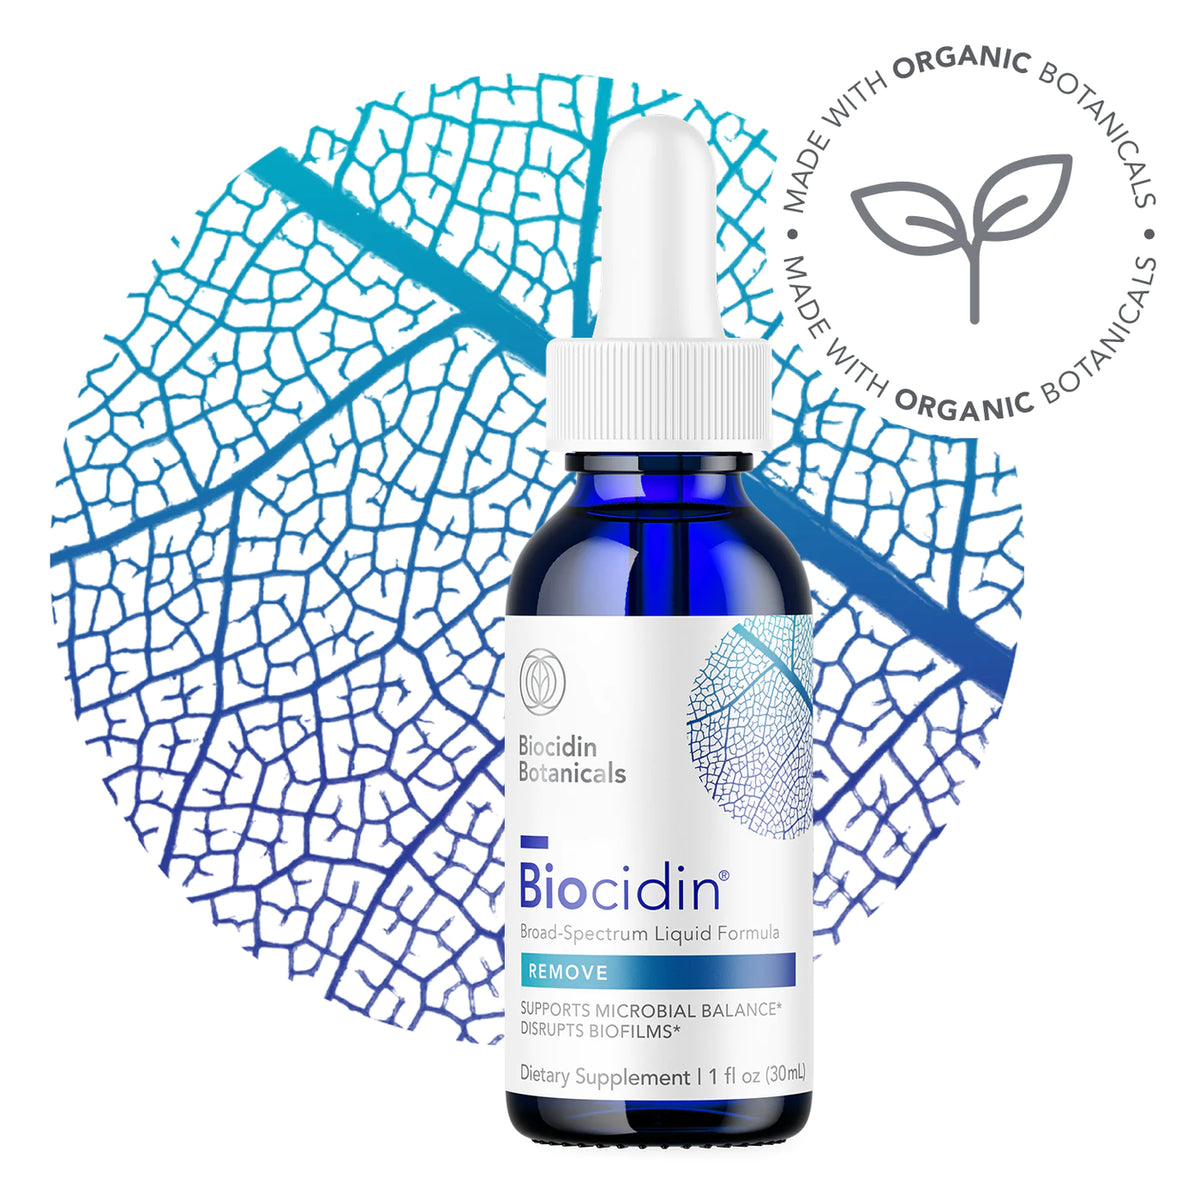 Biocidin Advanced Formula 30 ml  Bio-Botanical Research - Premium  from Bicidin Botanicals - Just $60.95! Shop now at Nutrigeek